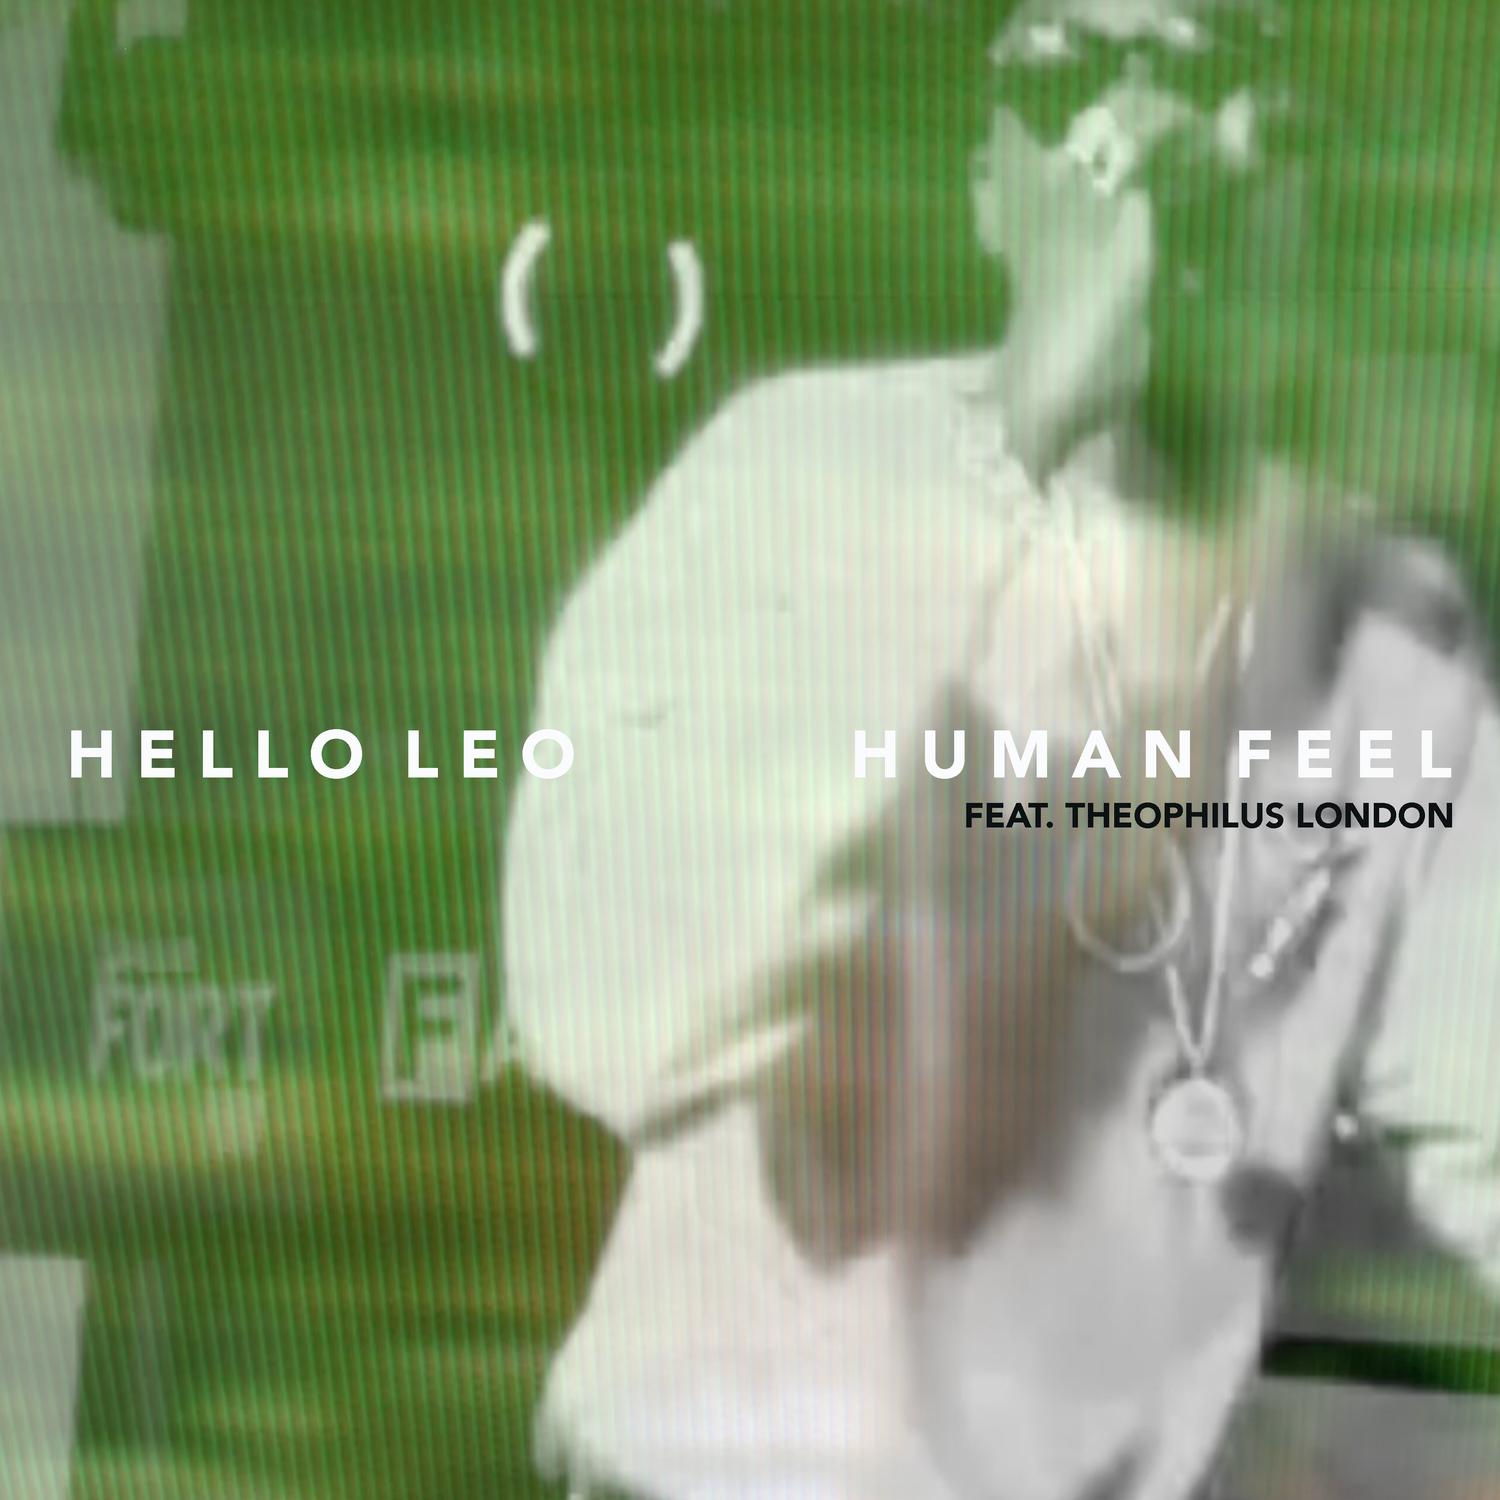 Theophilus London - Human Feel